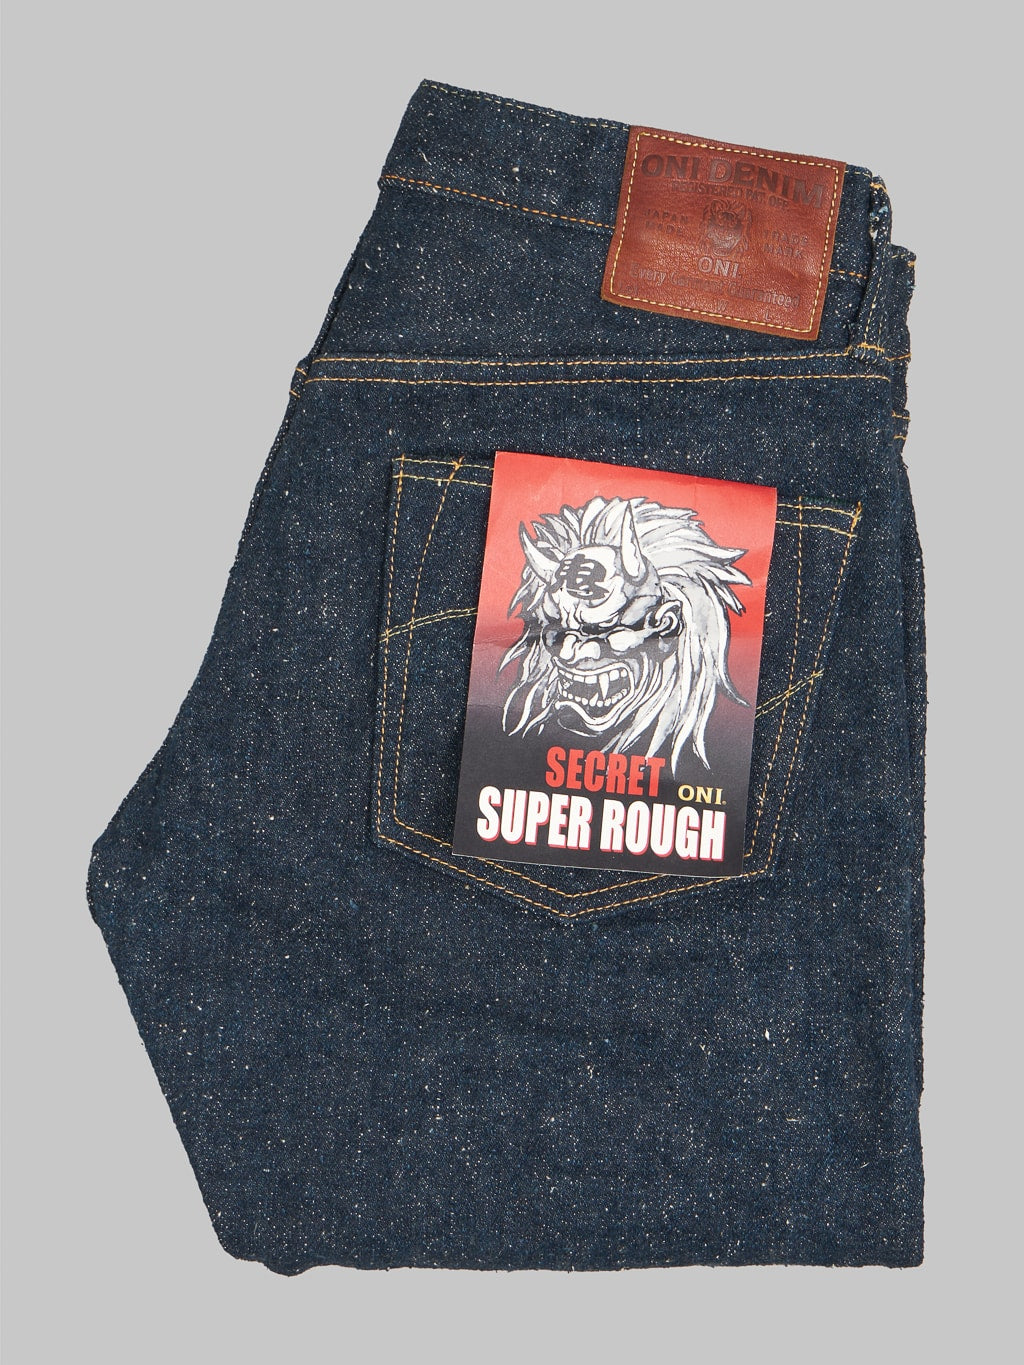 ONI Denim 246SESR Secret Super Rough Neat Straight selvedge Jeans japanese made